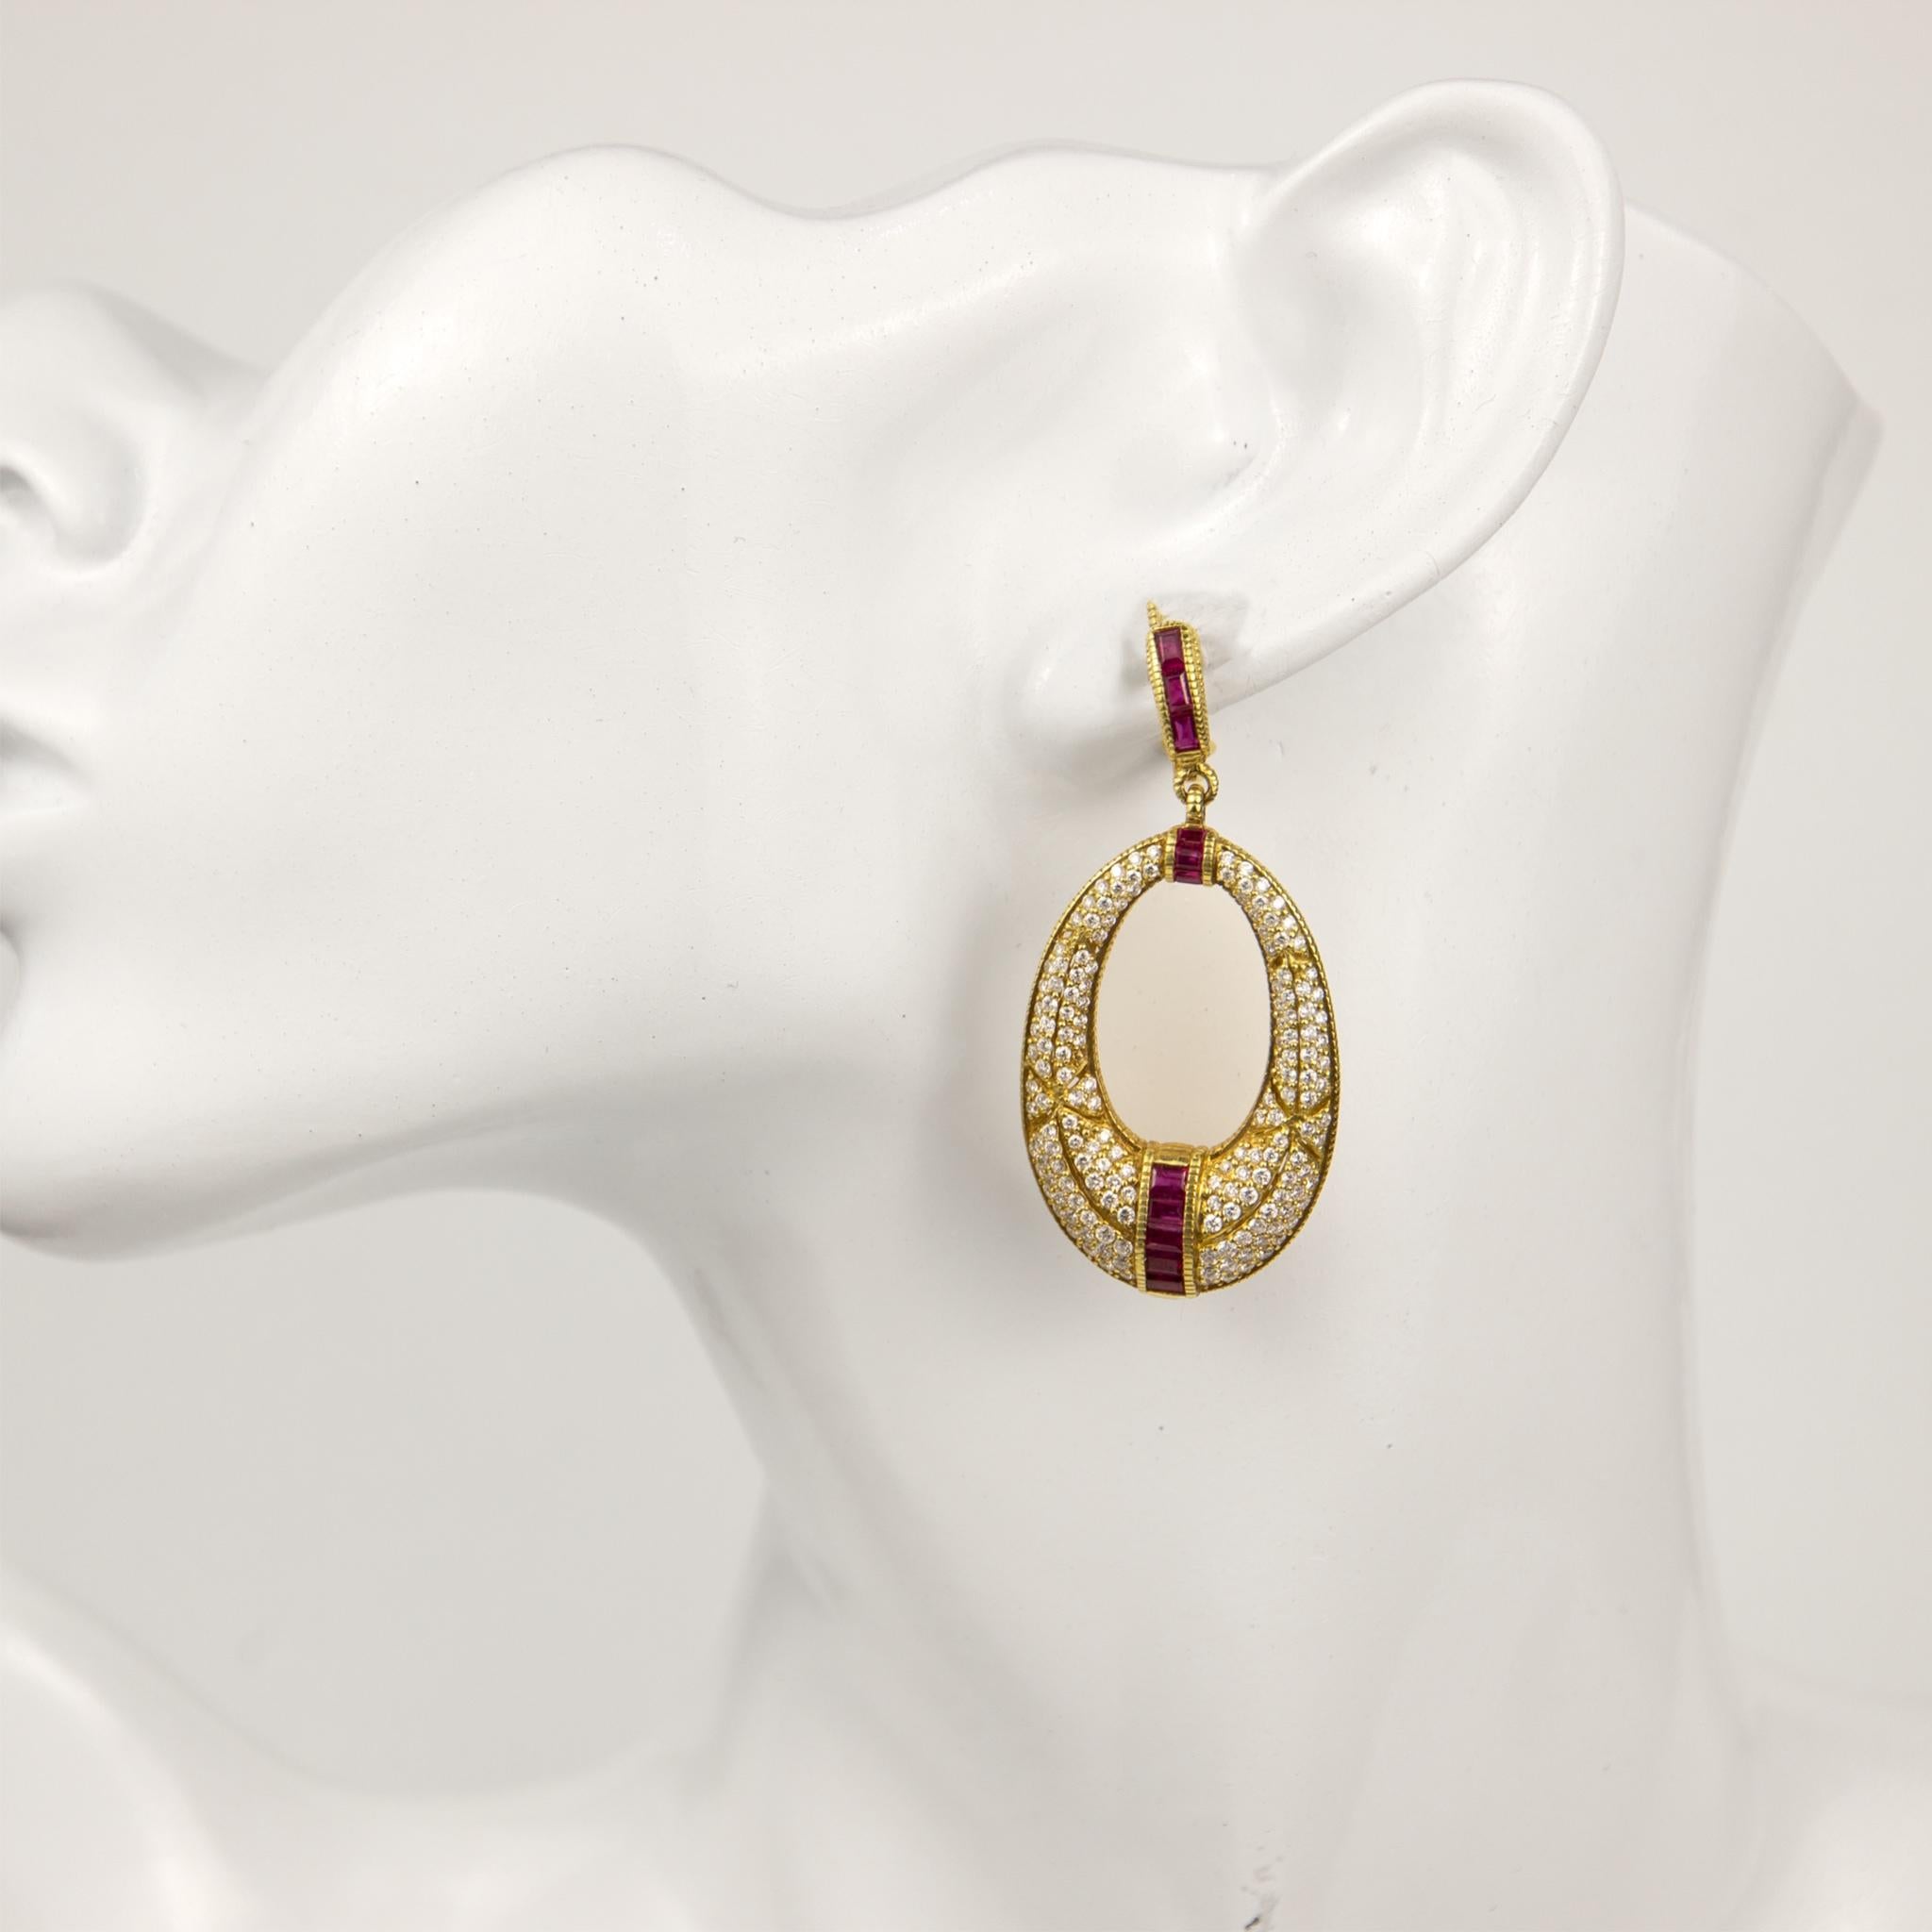 Brilliant Cut Judith Ripka 18k Yellow Gold Ruby & Diamond Earrings For Sale